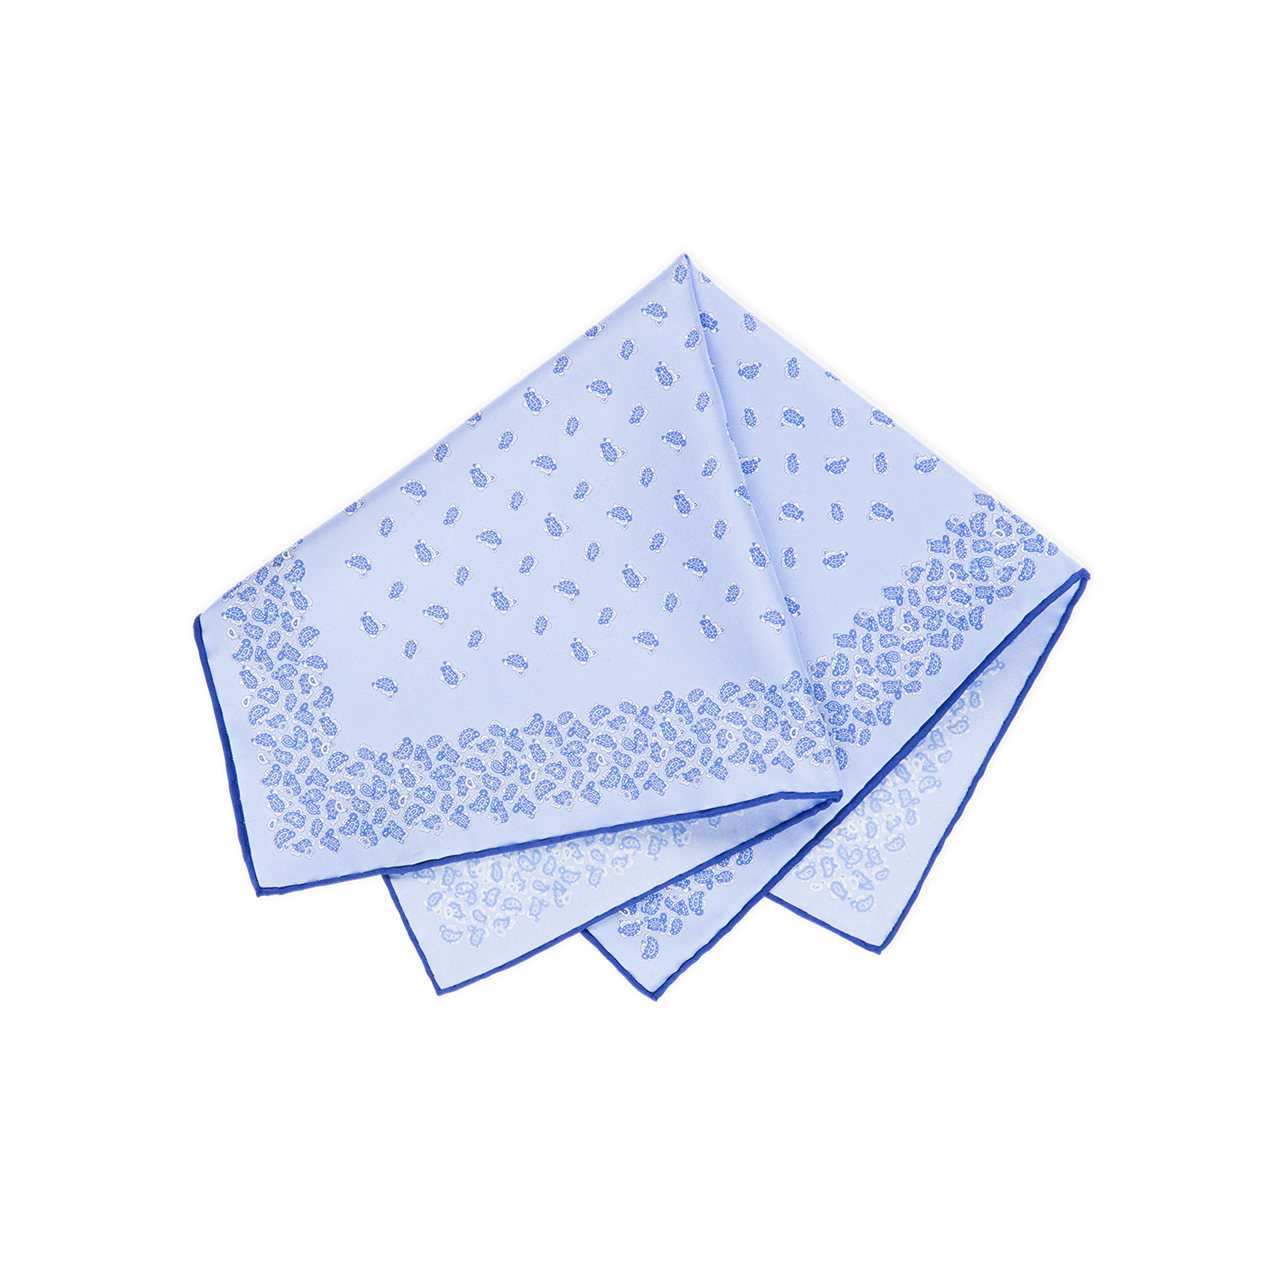 Handkerchief PNG pngteam.com